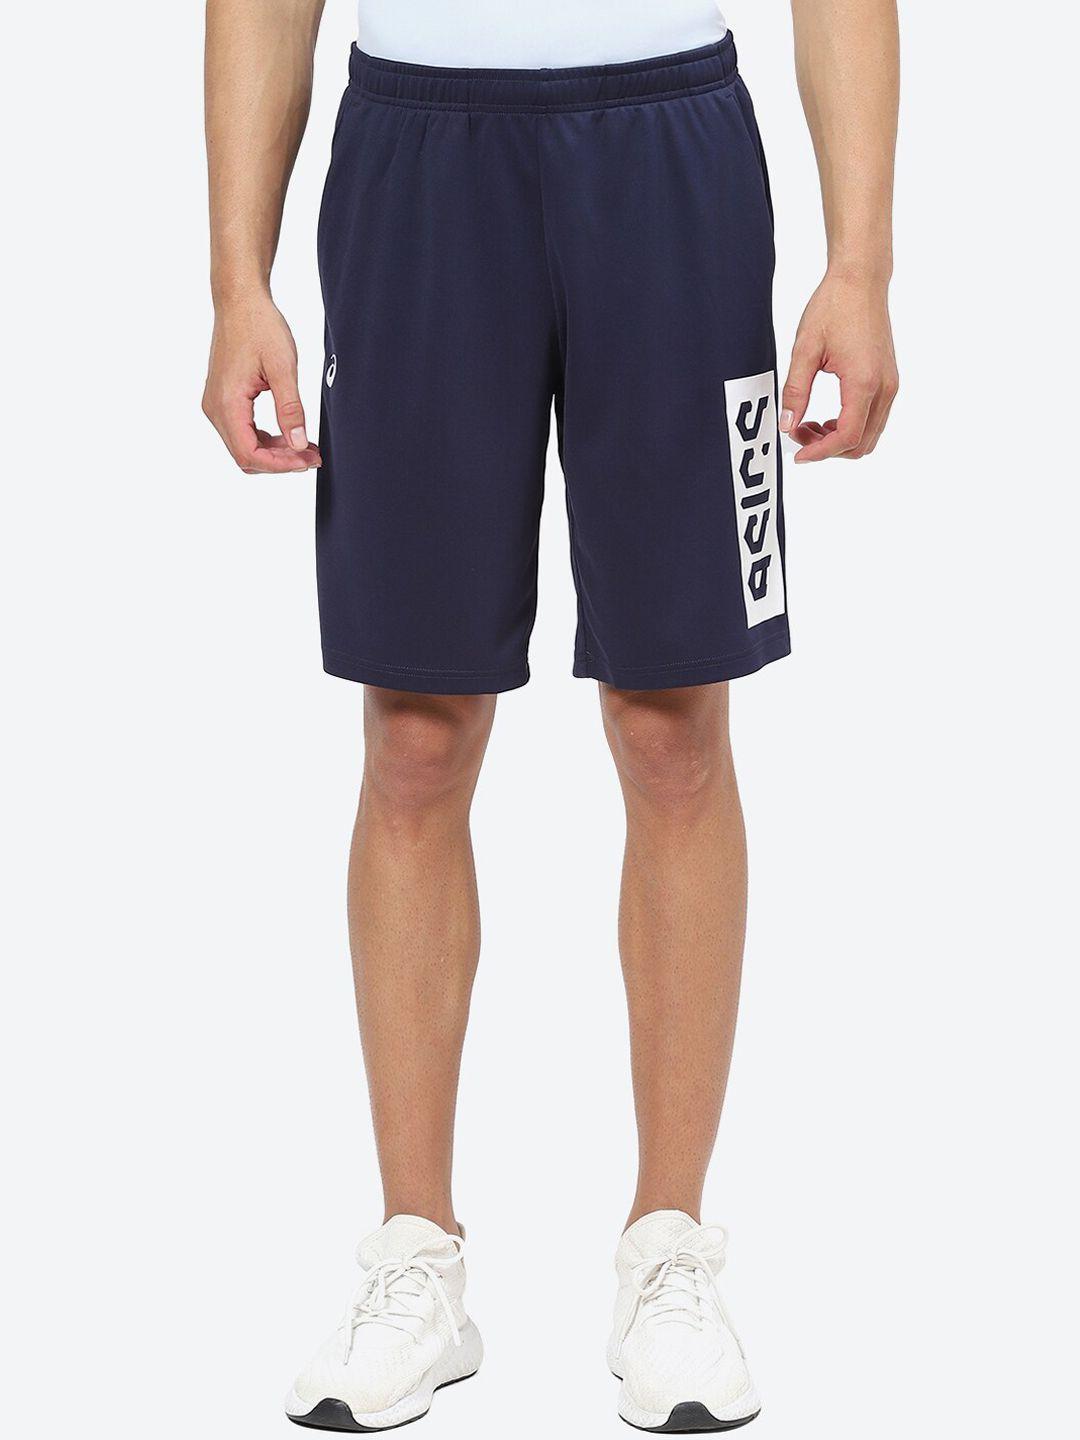 asics-men-hex-graphic-dry-shorts